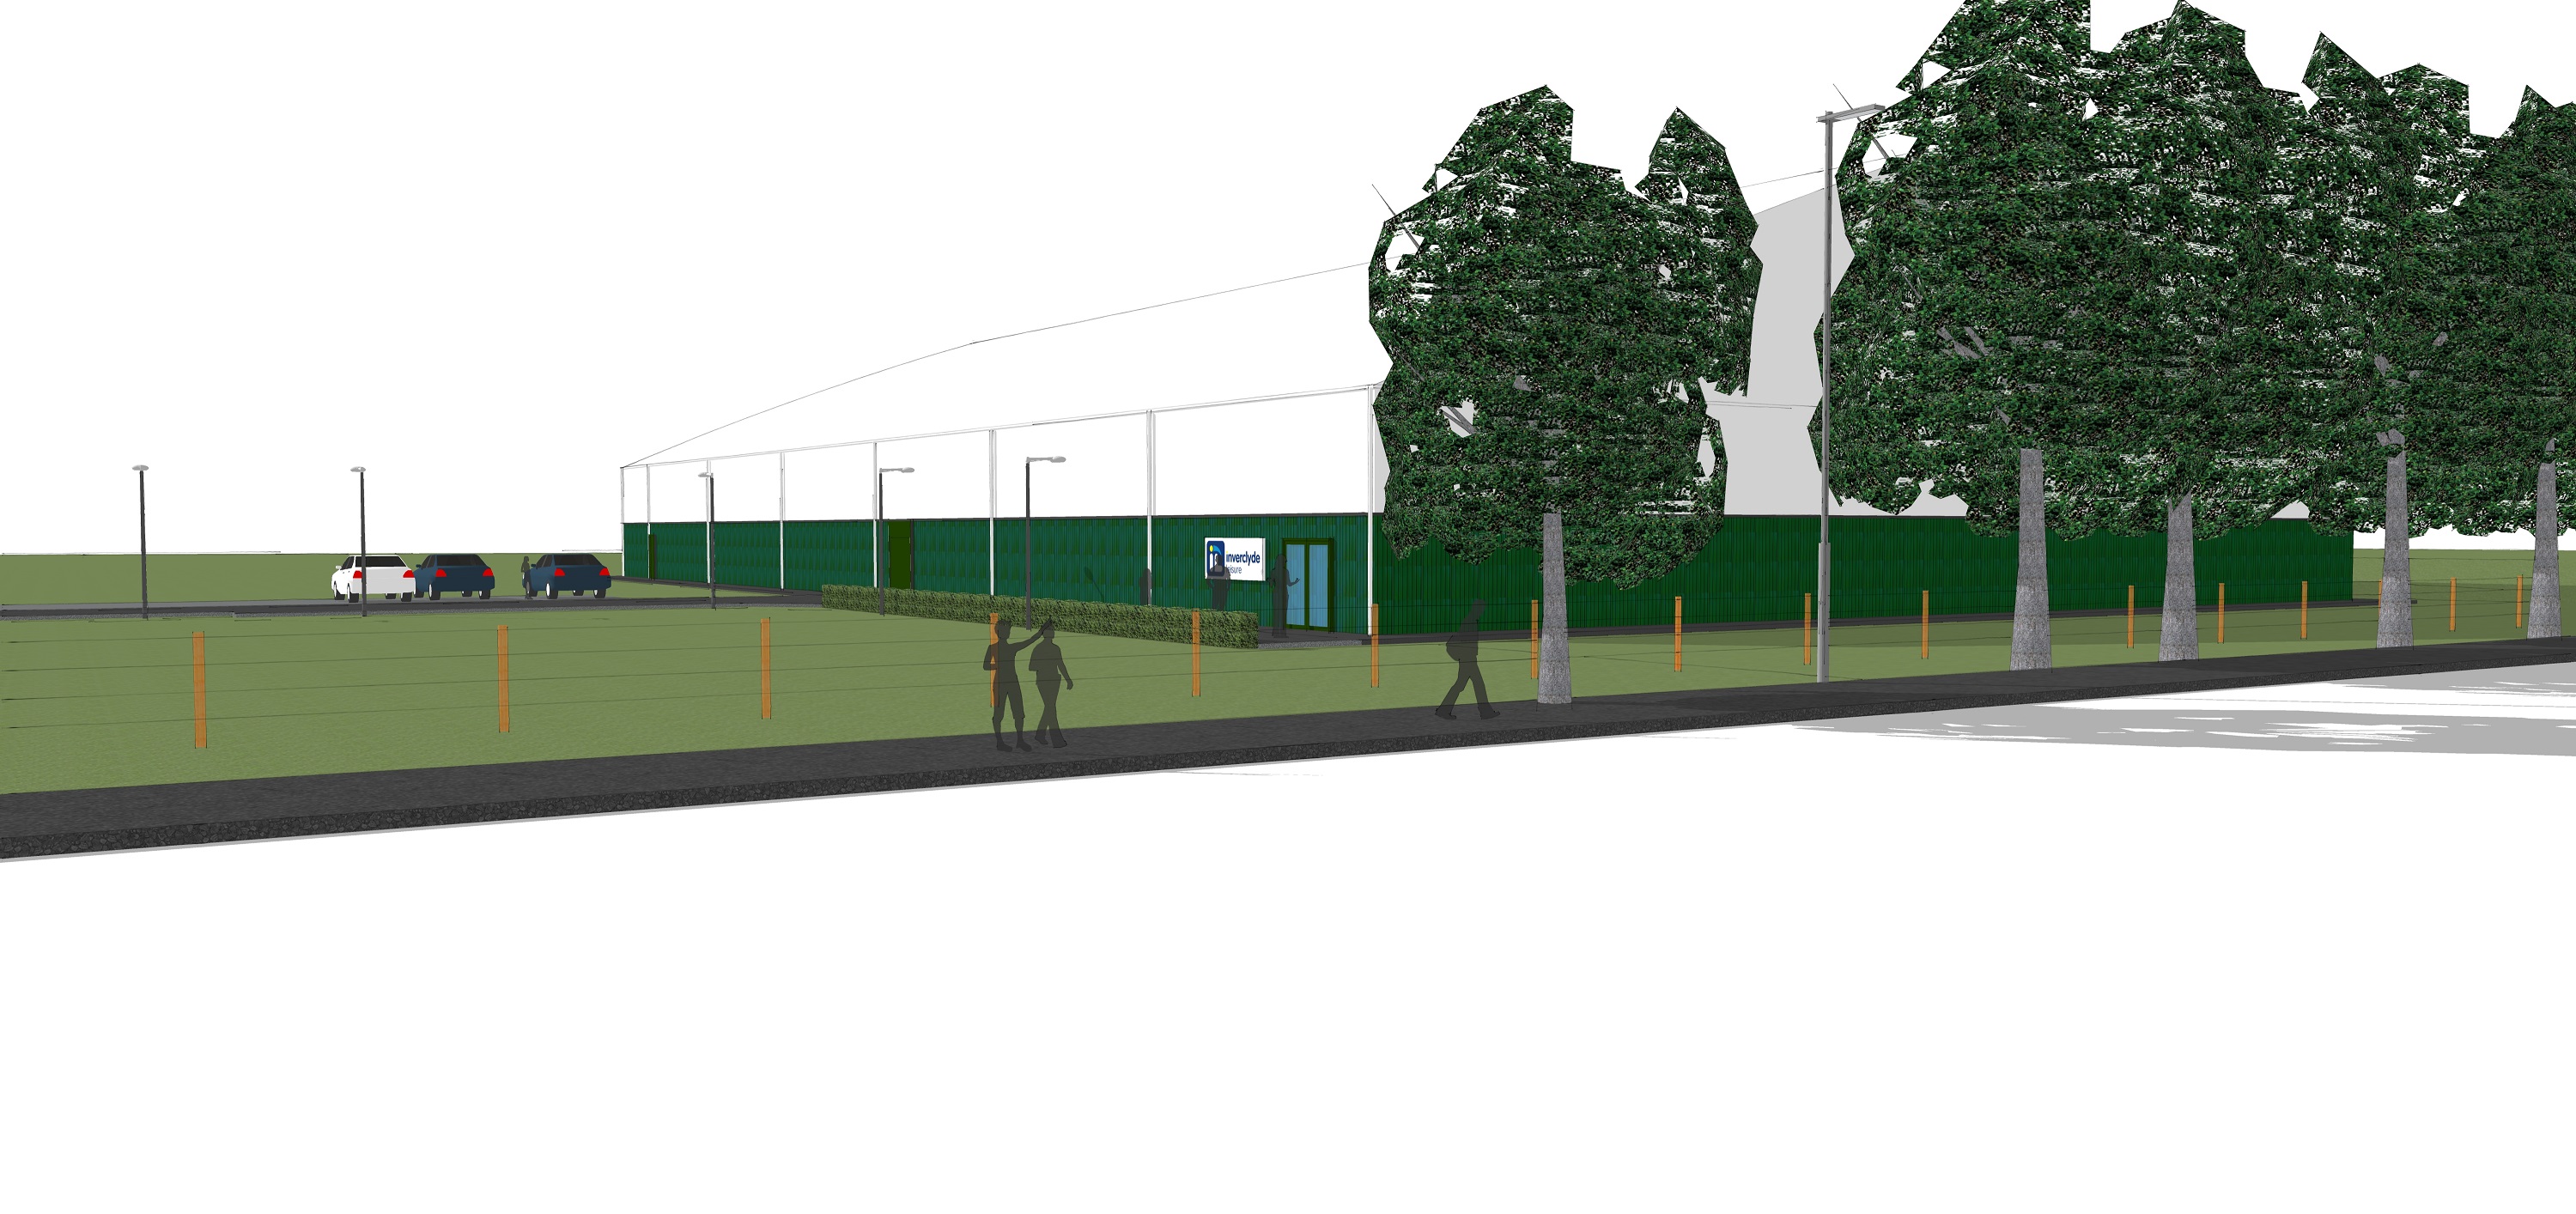 Plans served up for £1.8m Greenock indoor tennis centre